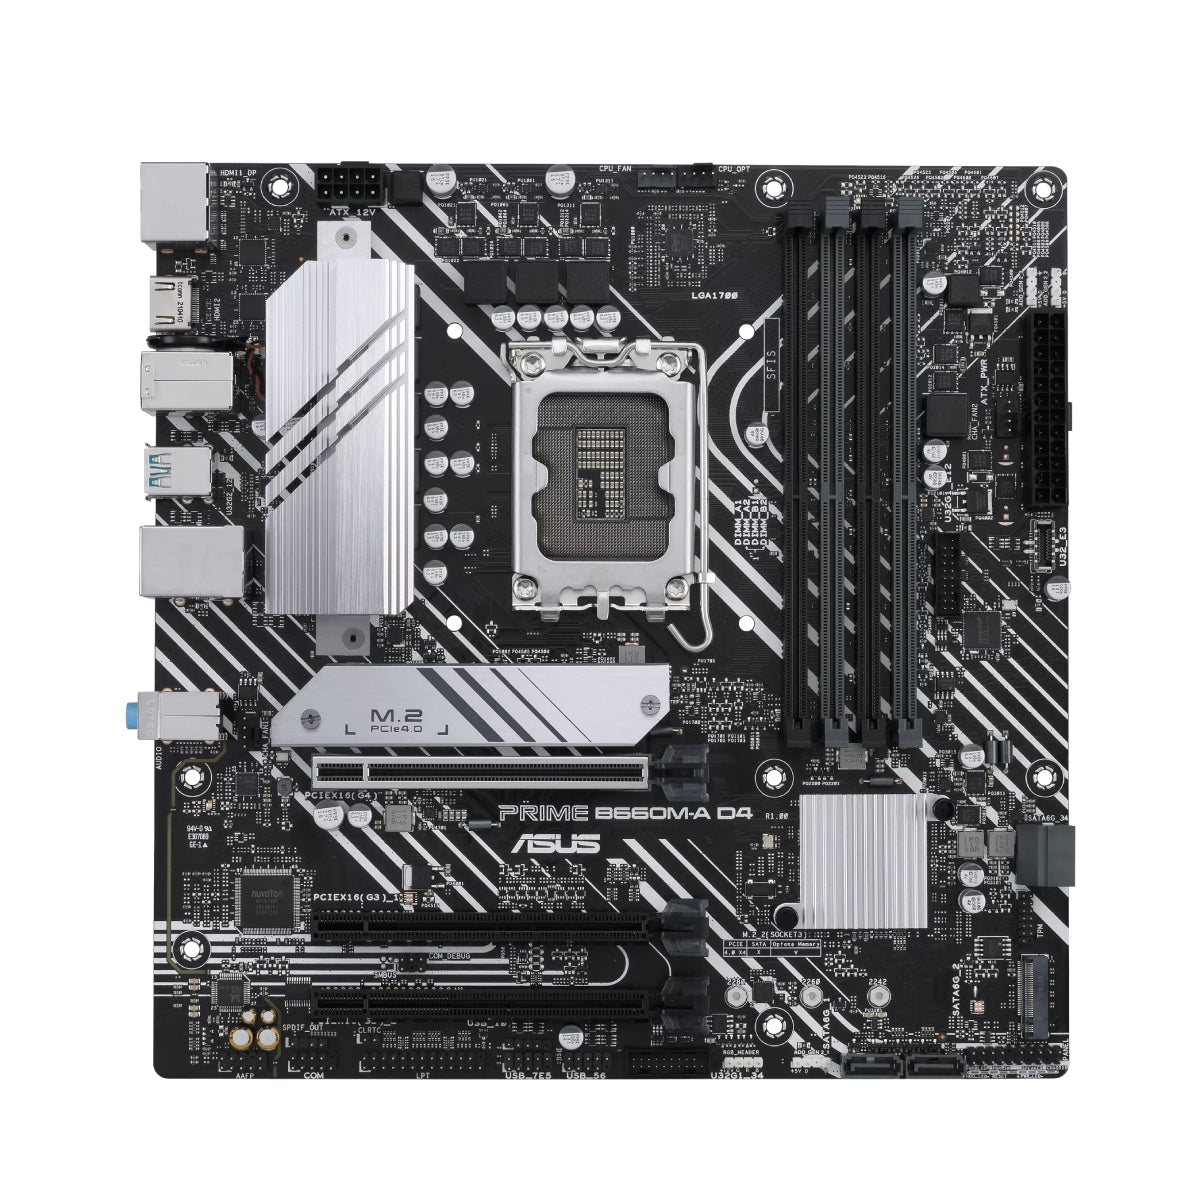 Asus PRIME B660M-A D4 - DDR4 LGA 1700 Intel Motherboard - Store 974 | ستور ٩٧٤